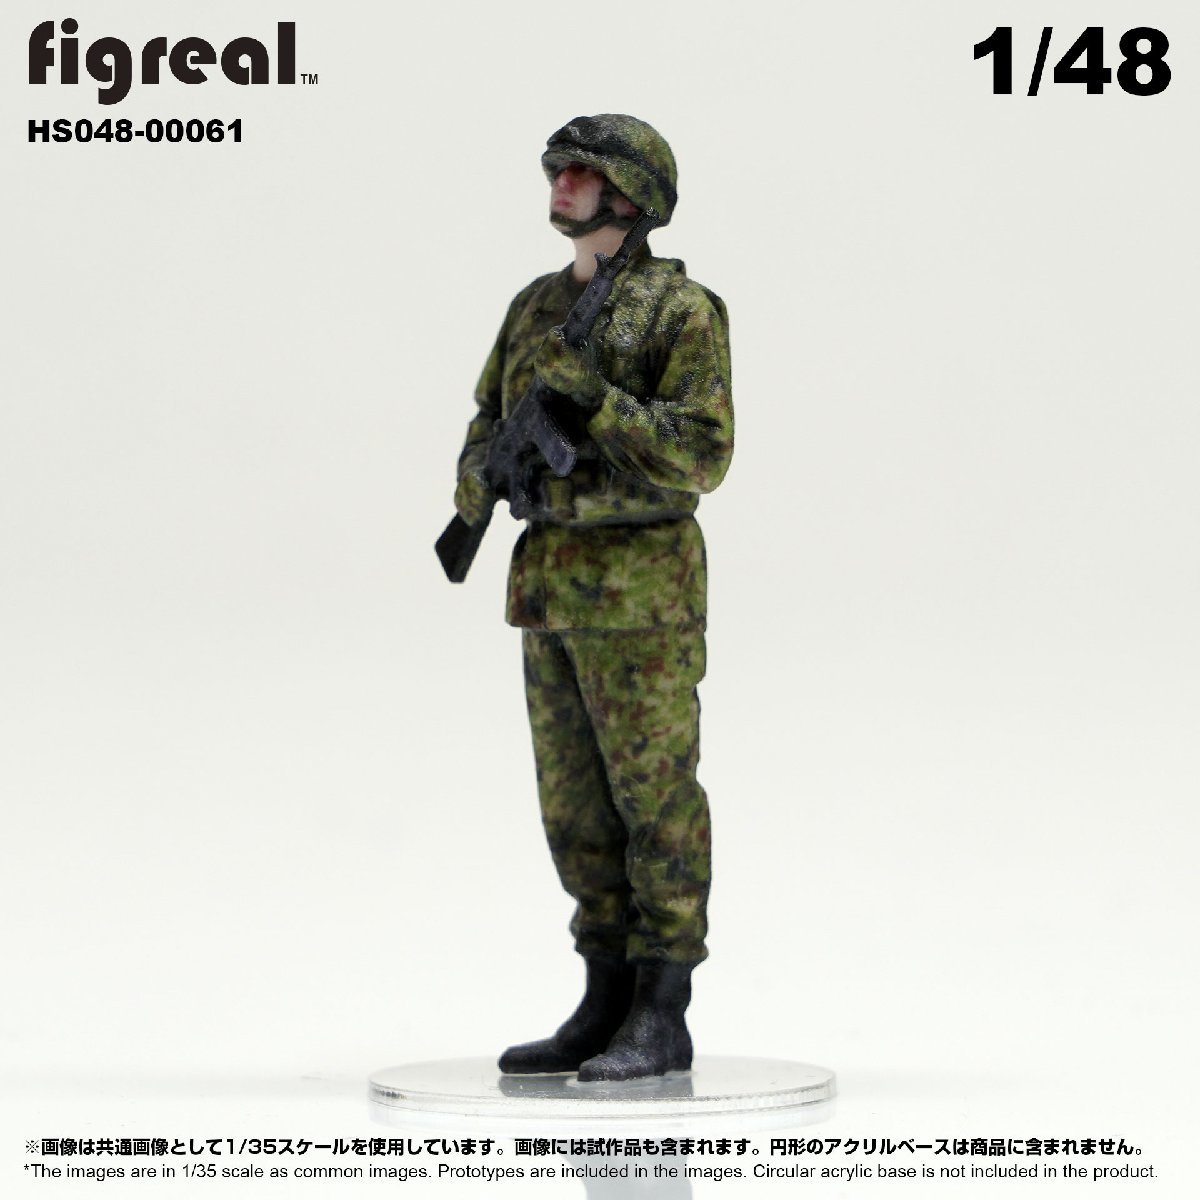 HS048-00061 figreal 陸上自衛隊 1/48 JGSDF 高精細フィギュア_画像3